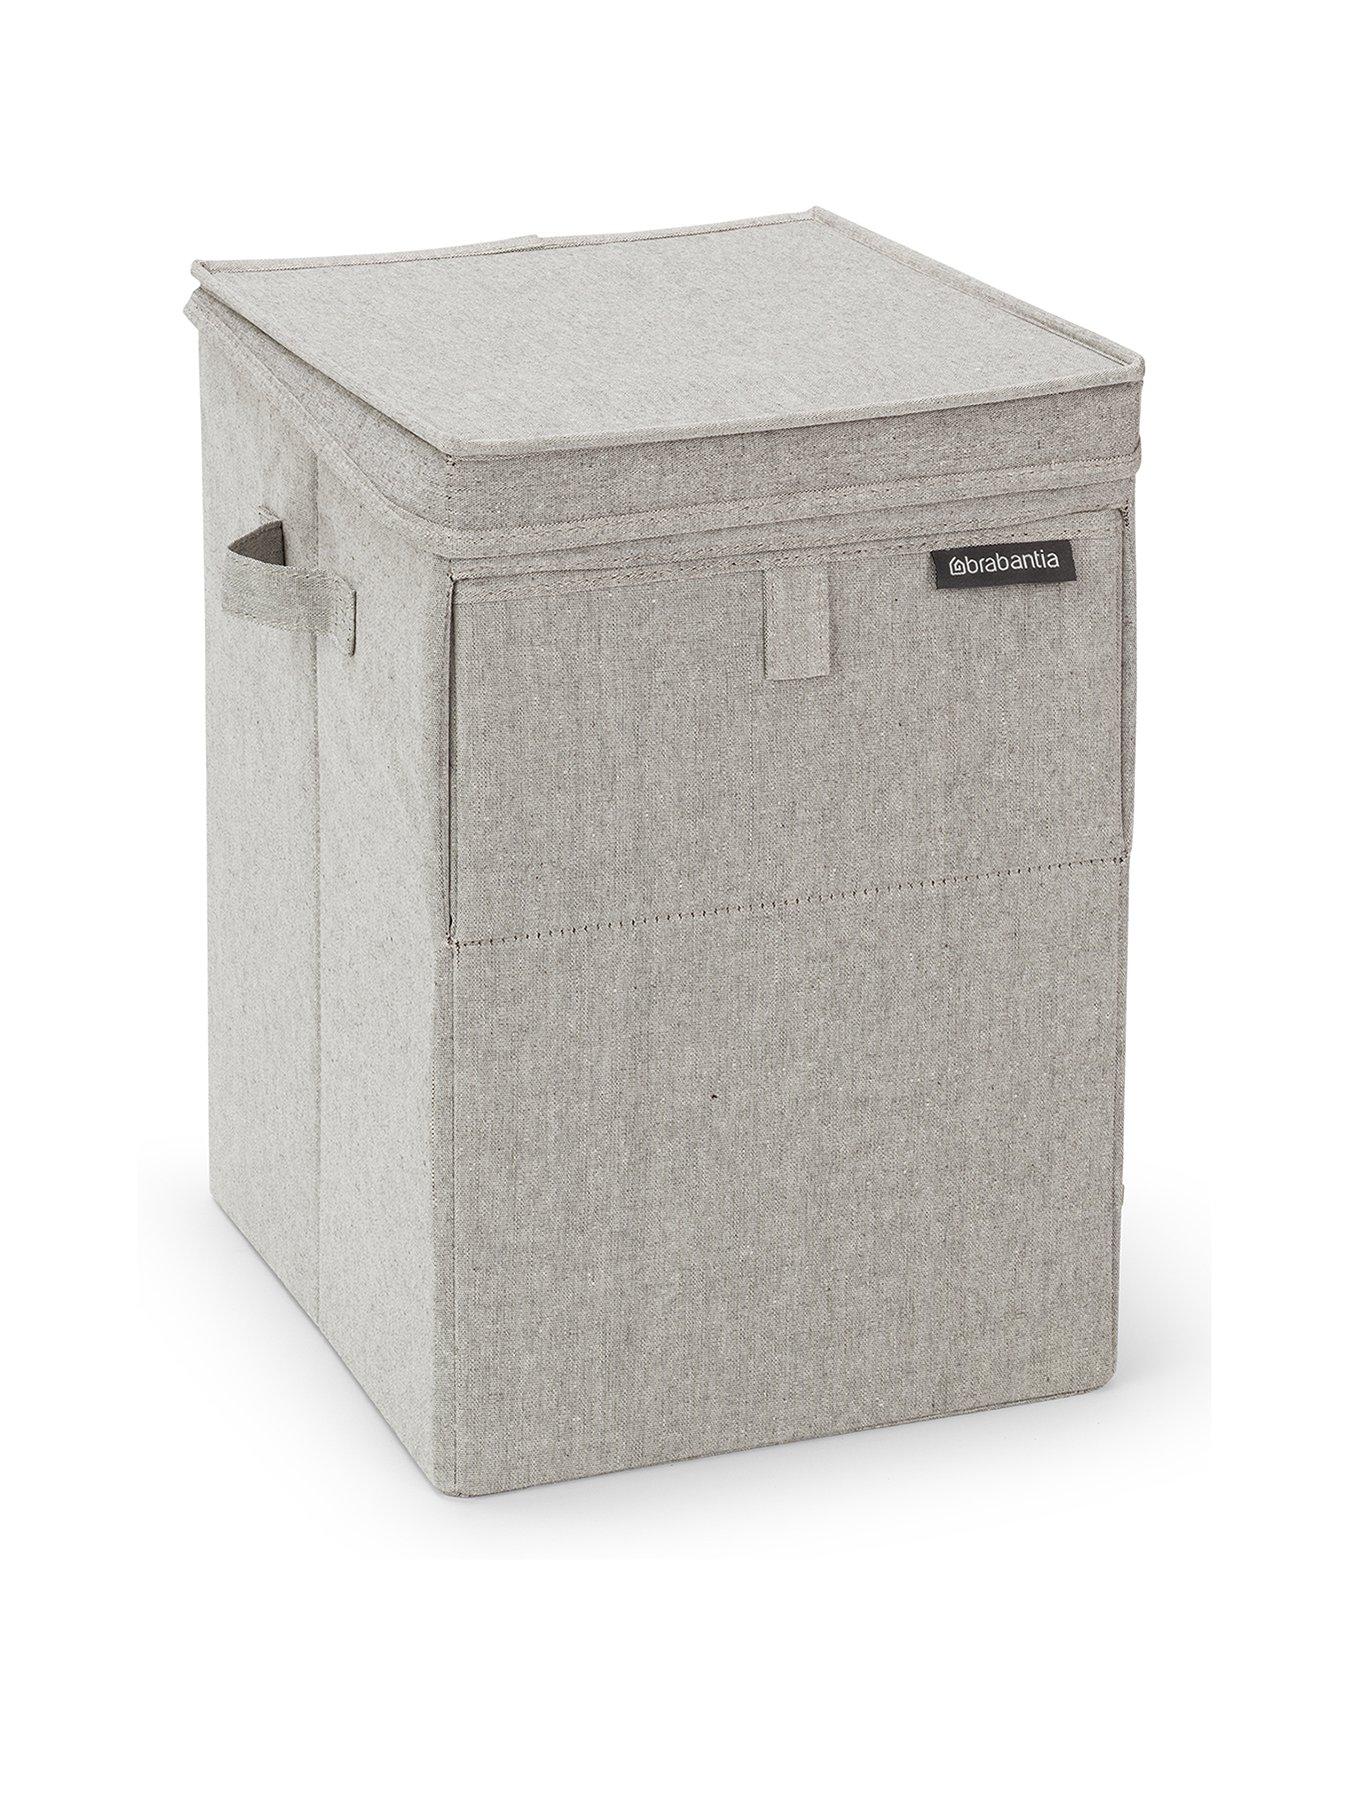 https://media.very.co.uk/i/very/QCTUT_SQ1_0000000088_NO_COLOR_SLf/brabantia-stackable-laundry-box.jpg?$180x240_retinamobilex2$